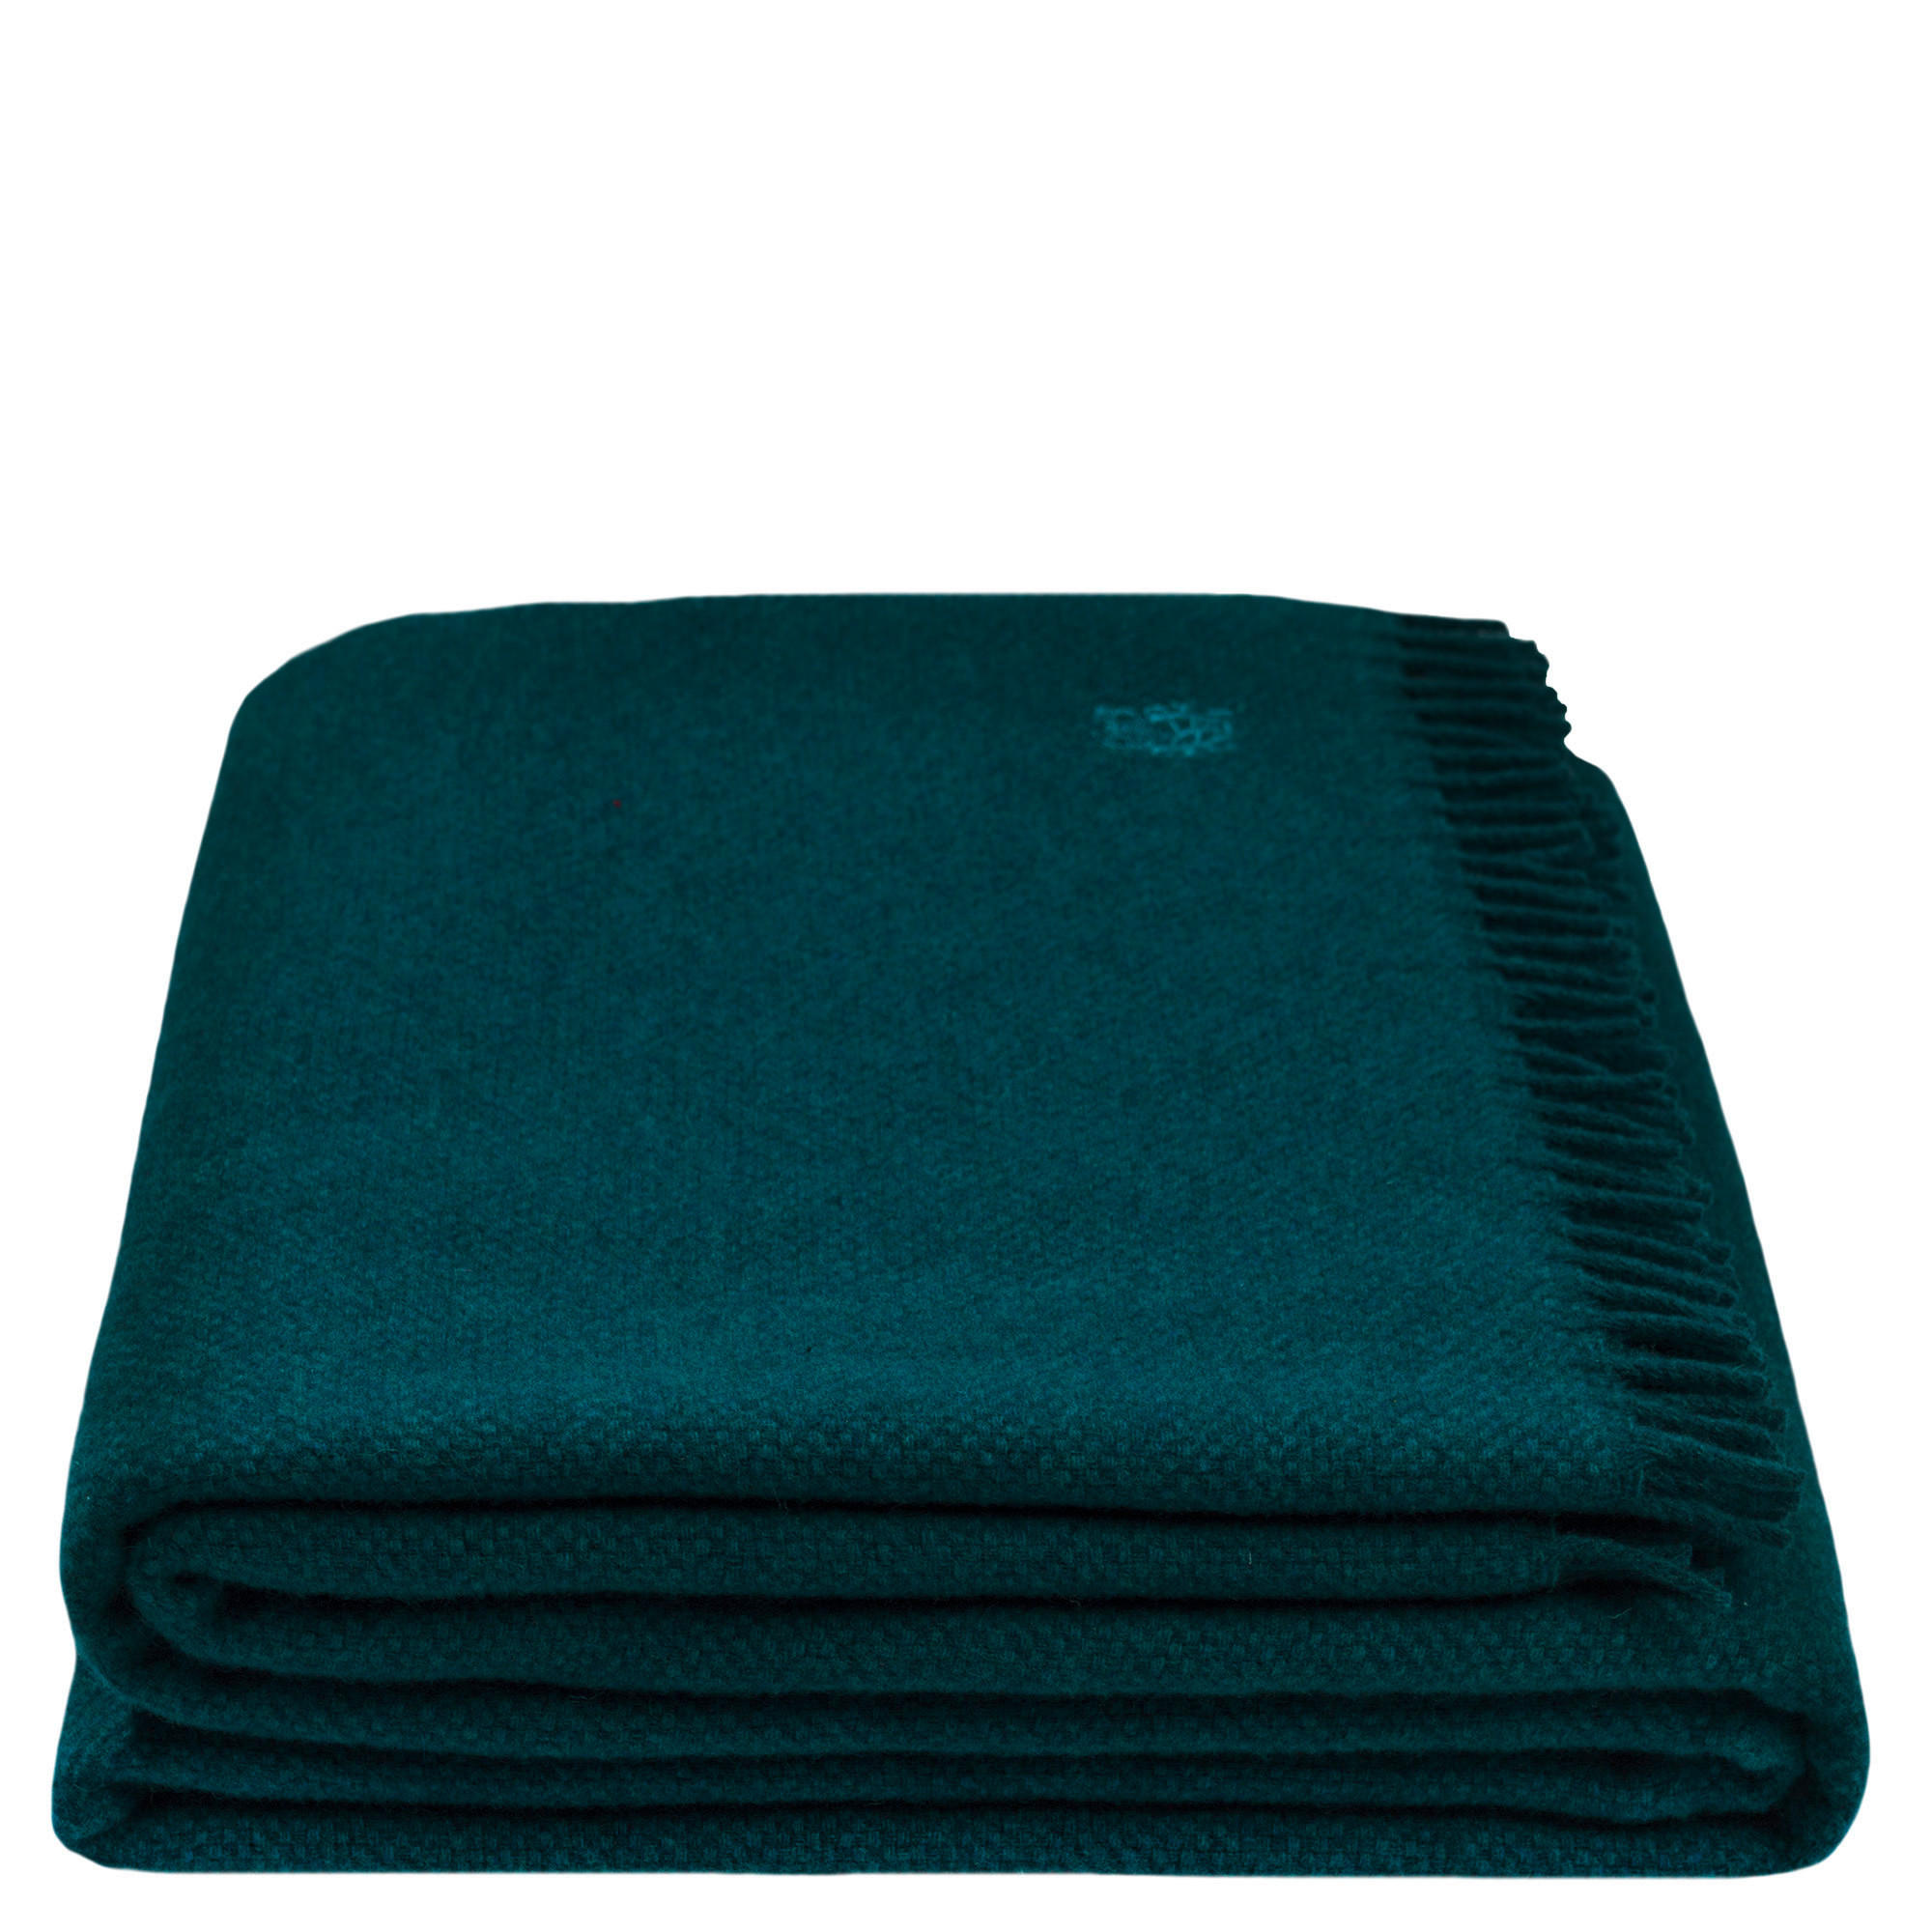 WOHNDECKE Must Relax 130/190 cm  - Blau, Basics, Textil (130/190cm) - Zoeppritz